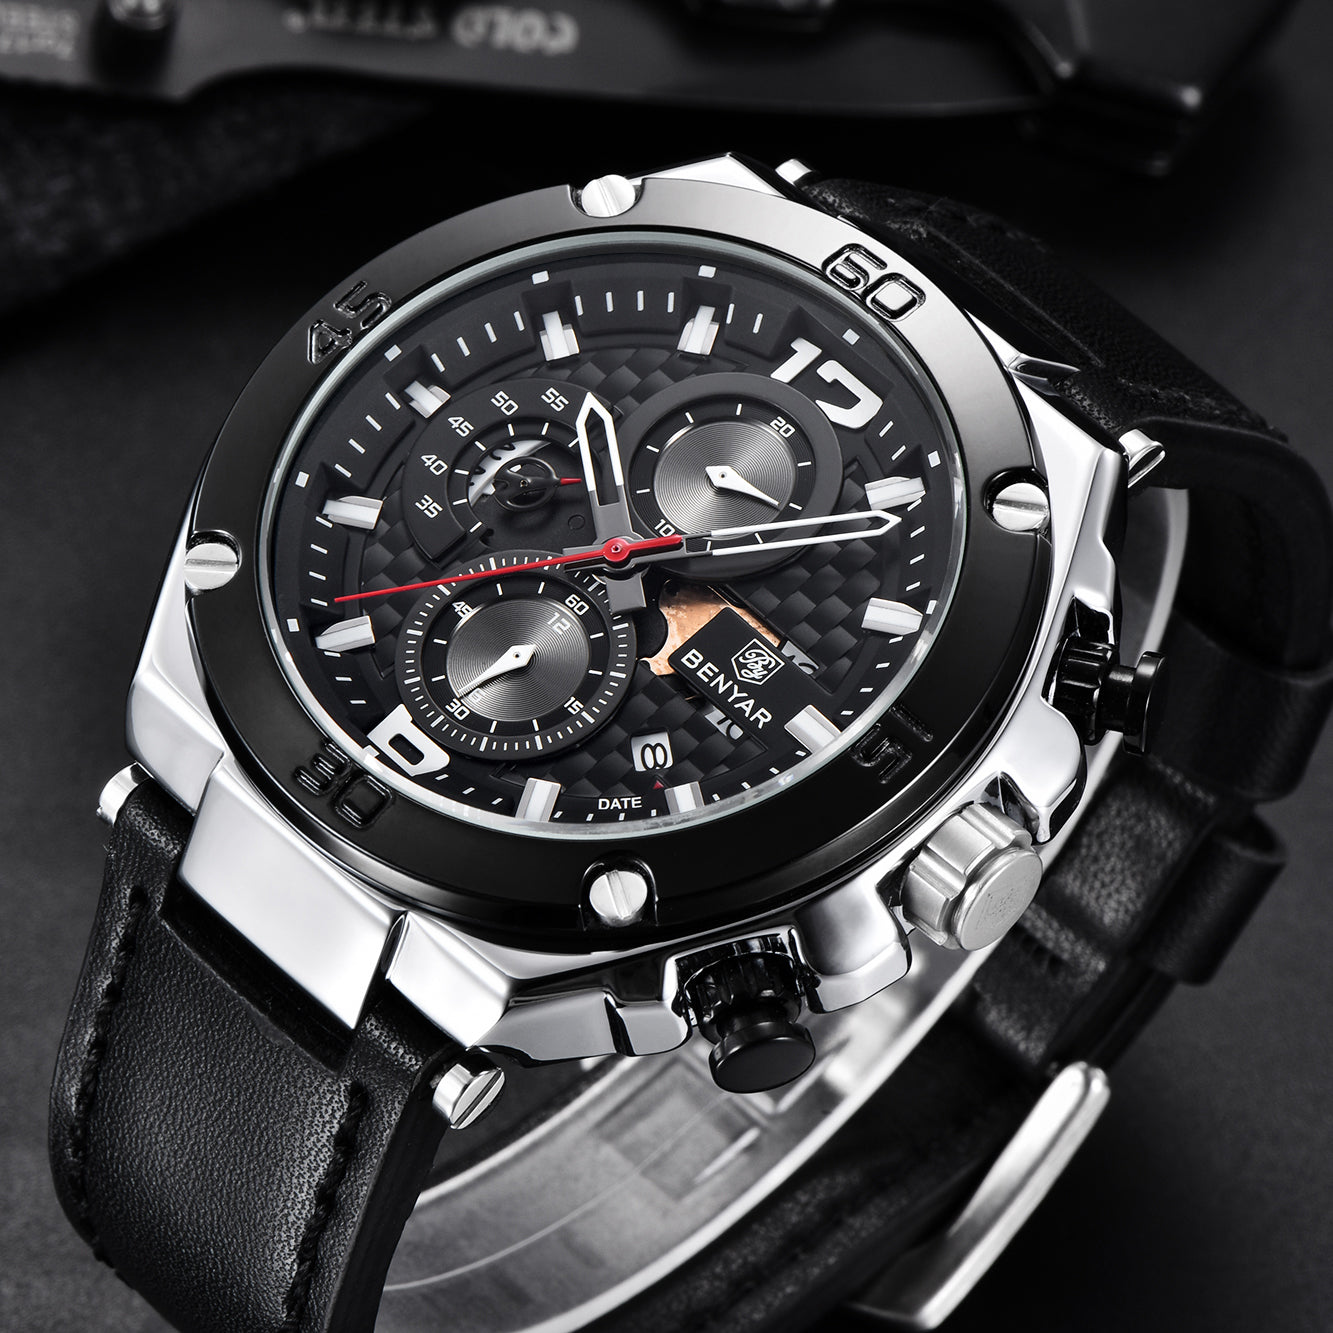 BENYAR BY 5151 Luxury Men Watch Leather Quartz Clock Fashion Chronograph Wristwatch  45MM Male Sport Military